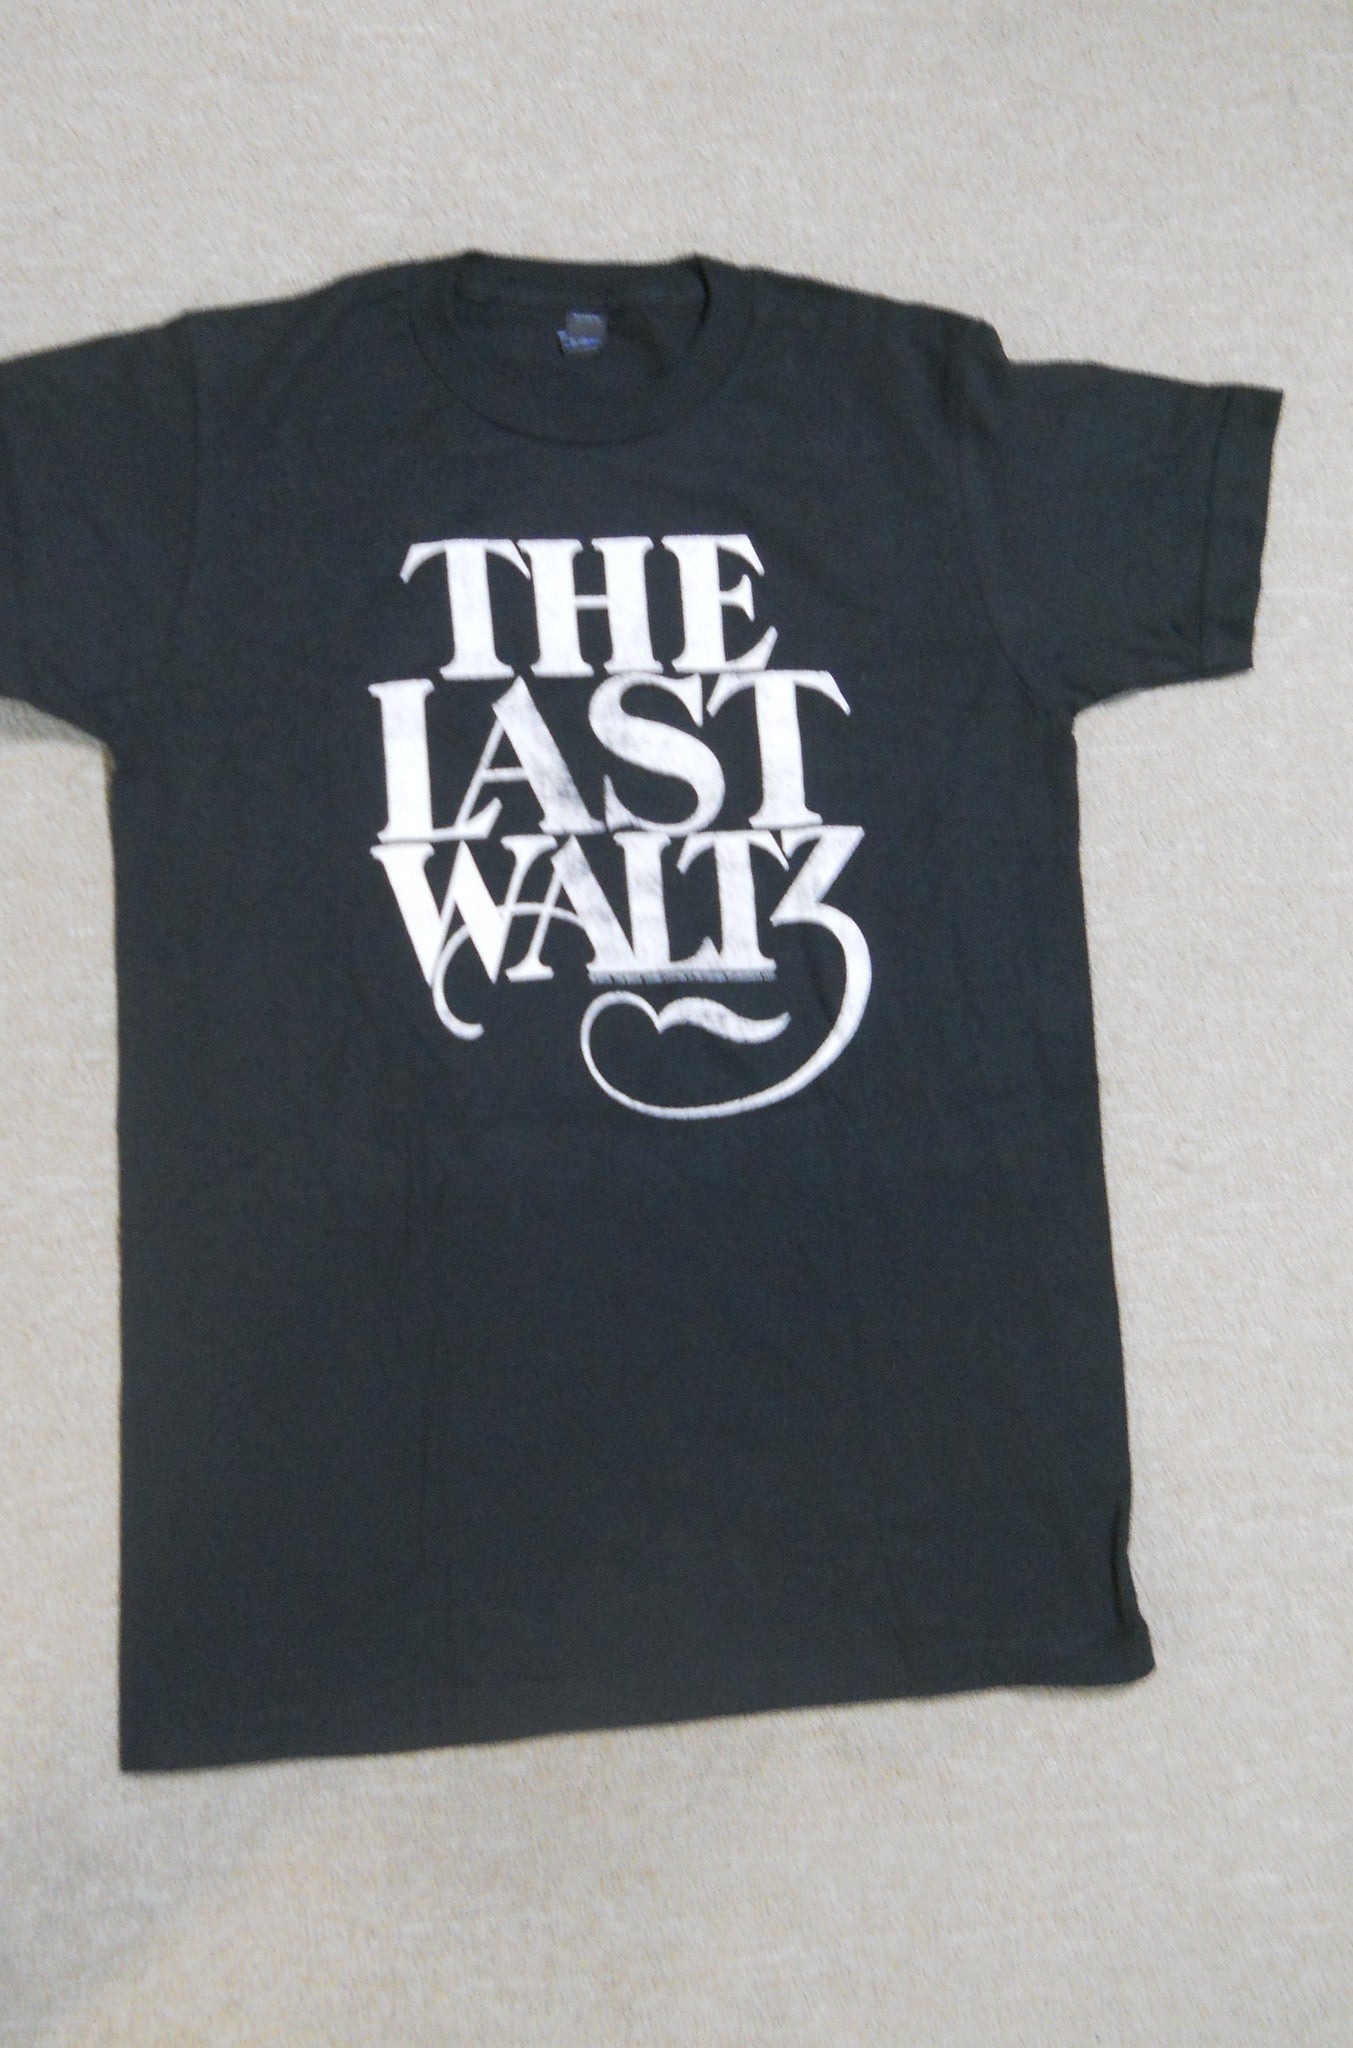 The Band The Last Waltz T-Shirt - HalfMoonMusic